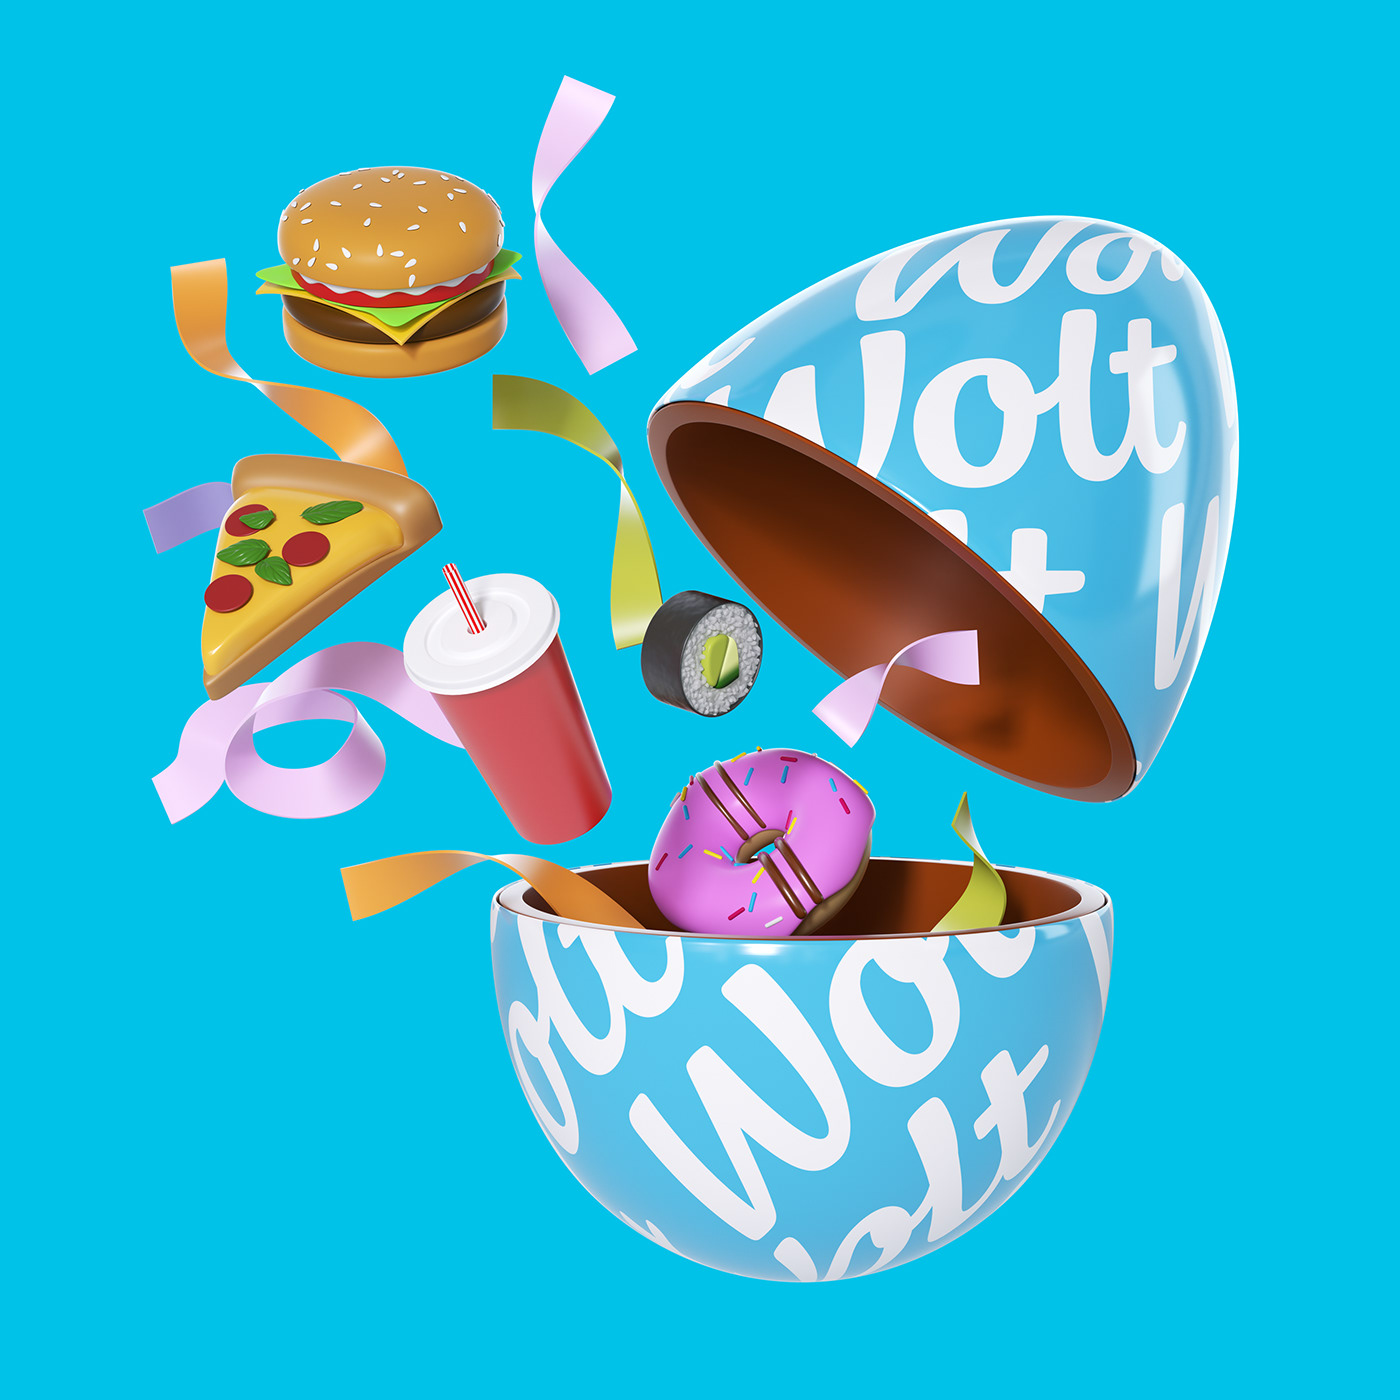 3D blue branding  Character design  Food  Fun lighting modeling Wolt